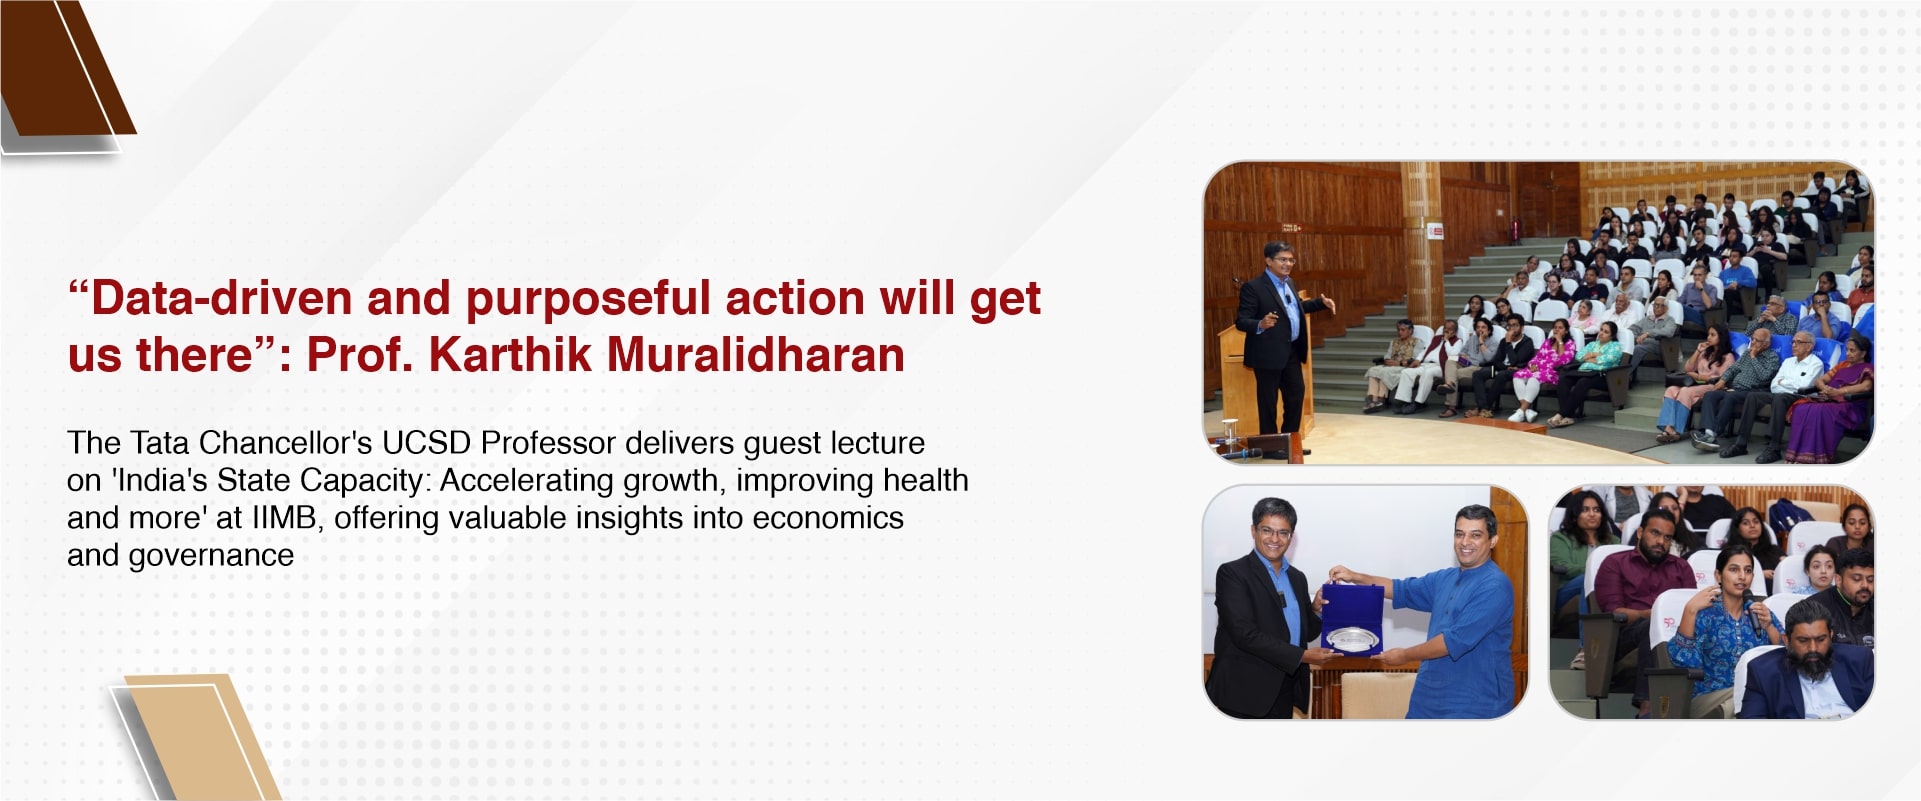 “Data-driven and purposeful action will get us there”: Prof. Karthik Muralidharan